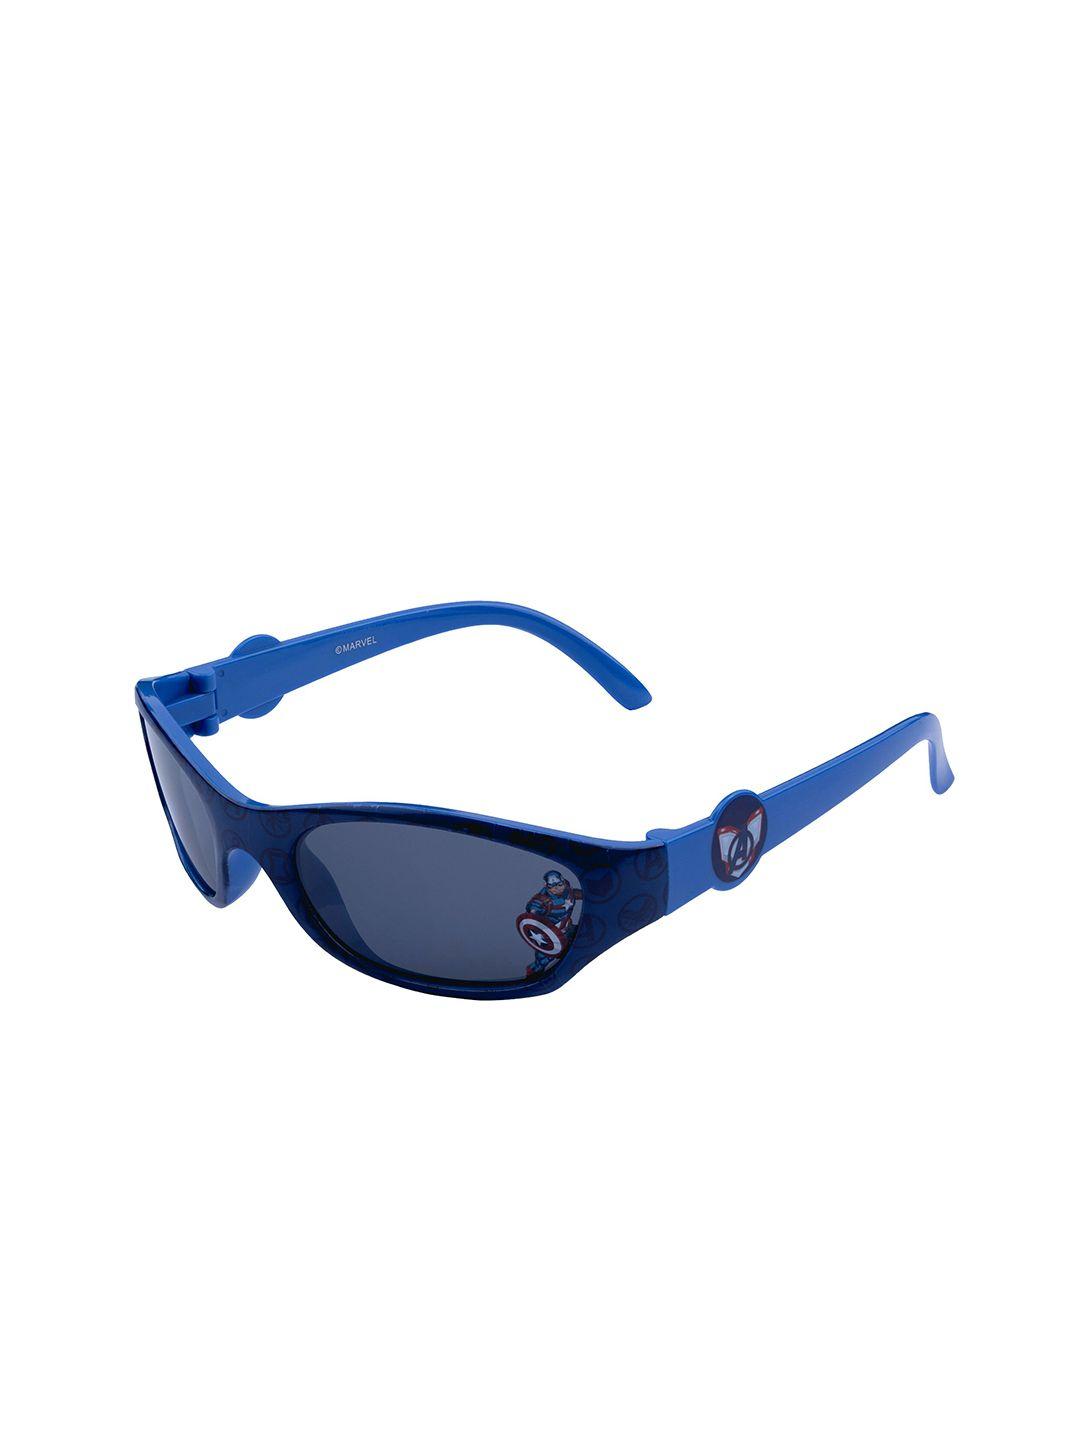 Marvel Boys Grey Lens & Blue Rectangle Sunglasses with Polarized & UV Protected Lens